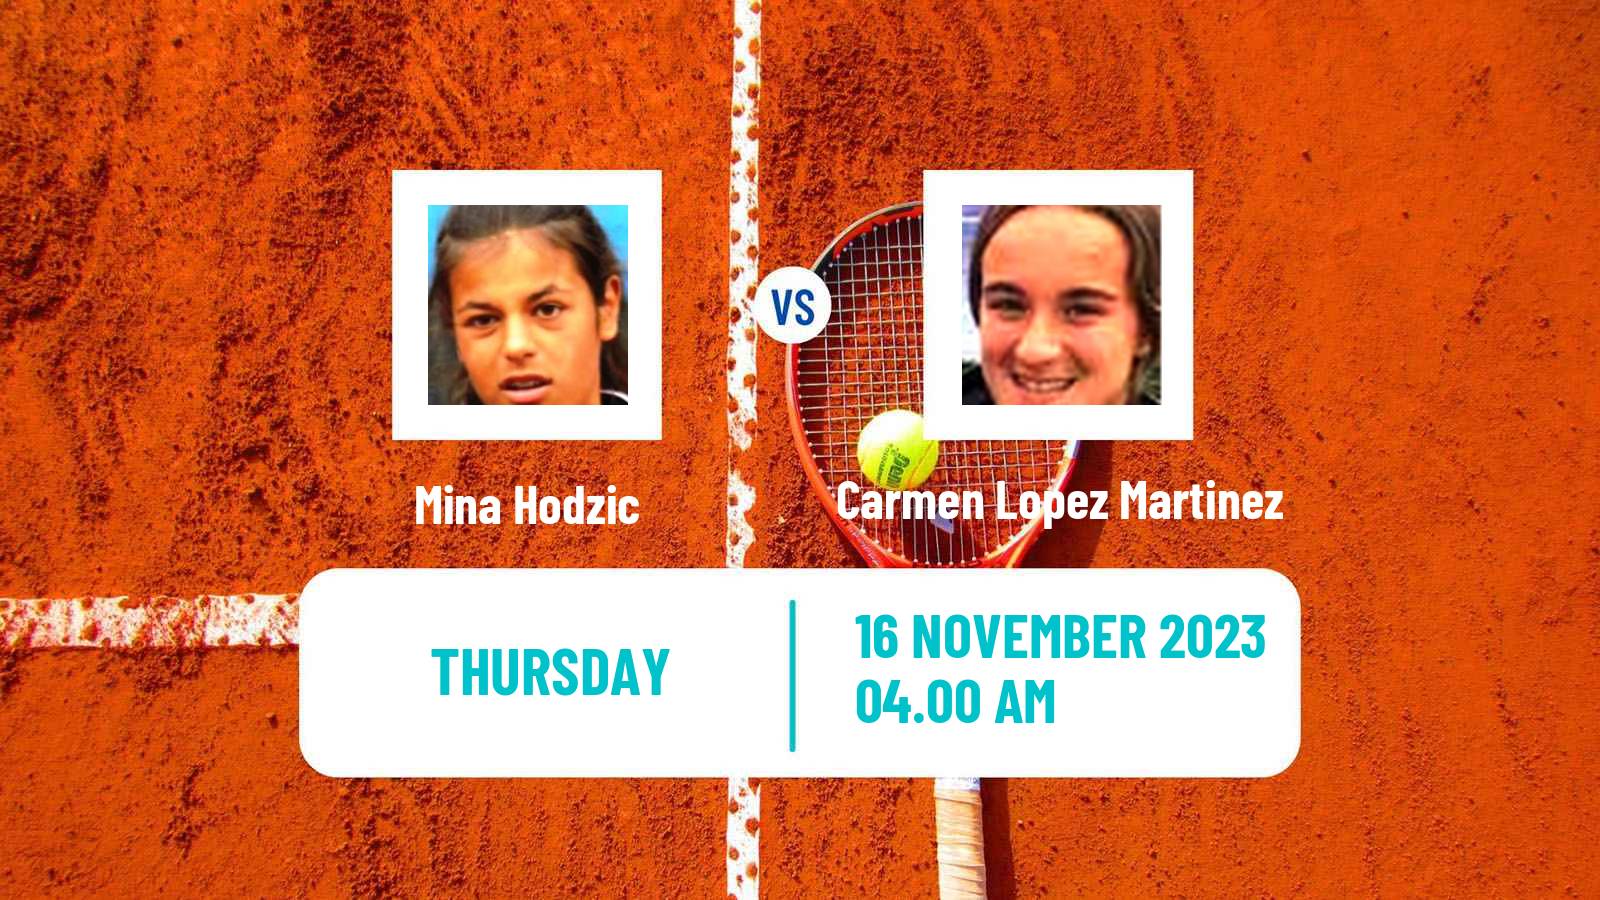 Tennis ITF W15 Nules Women Mina Hodzic - Carmen Lopez Martinez